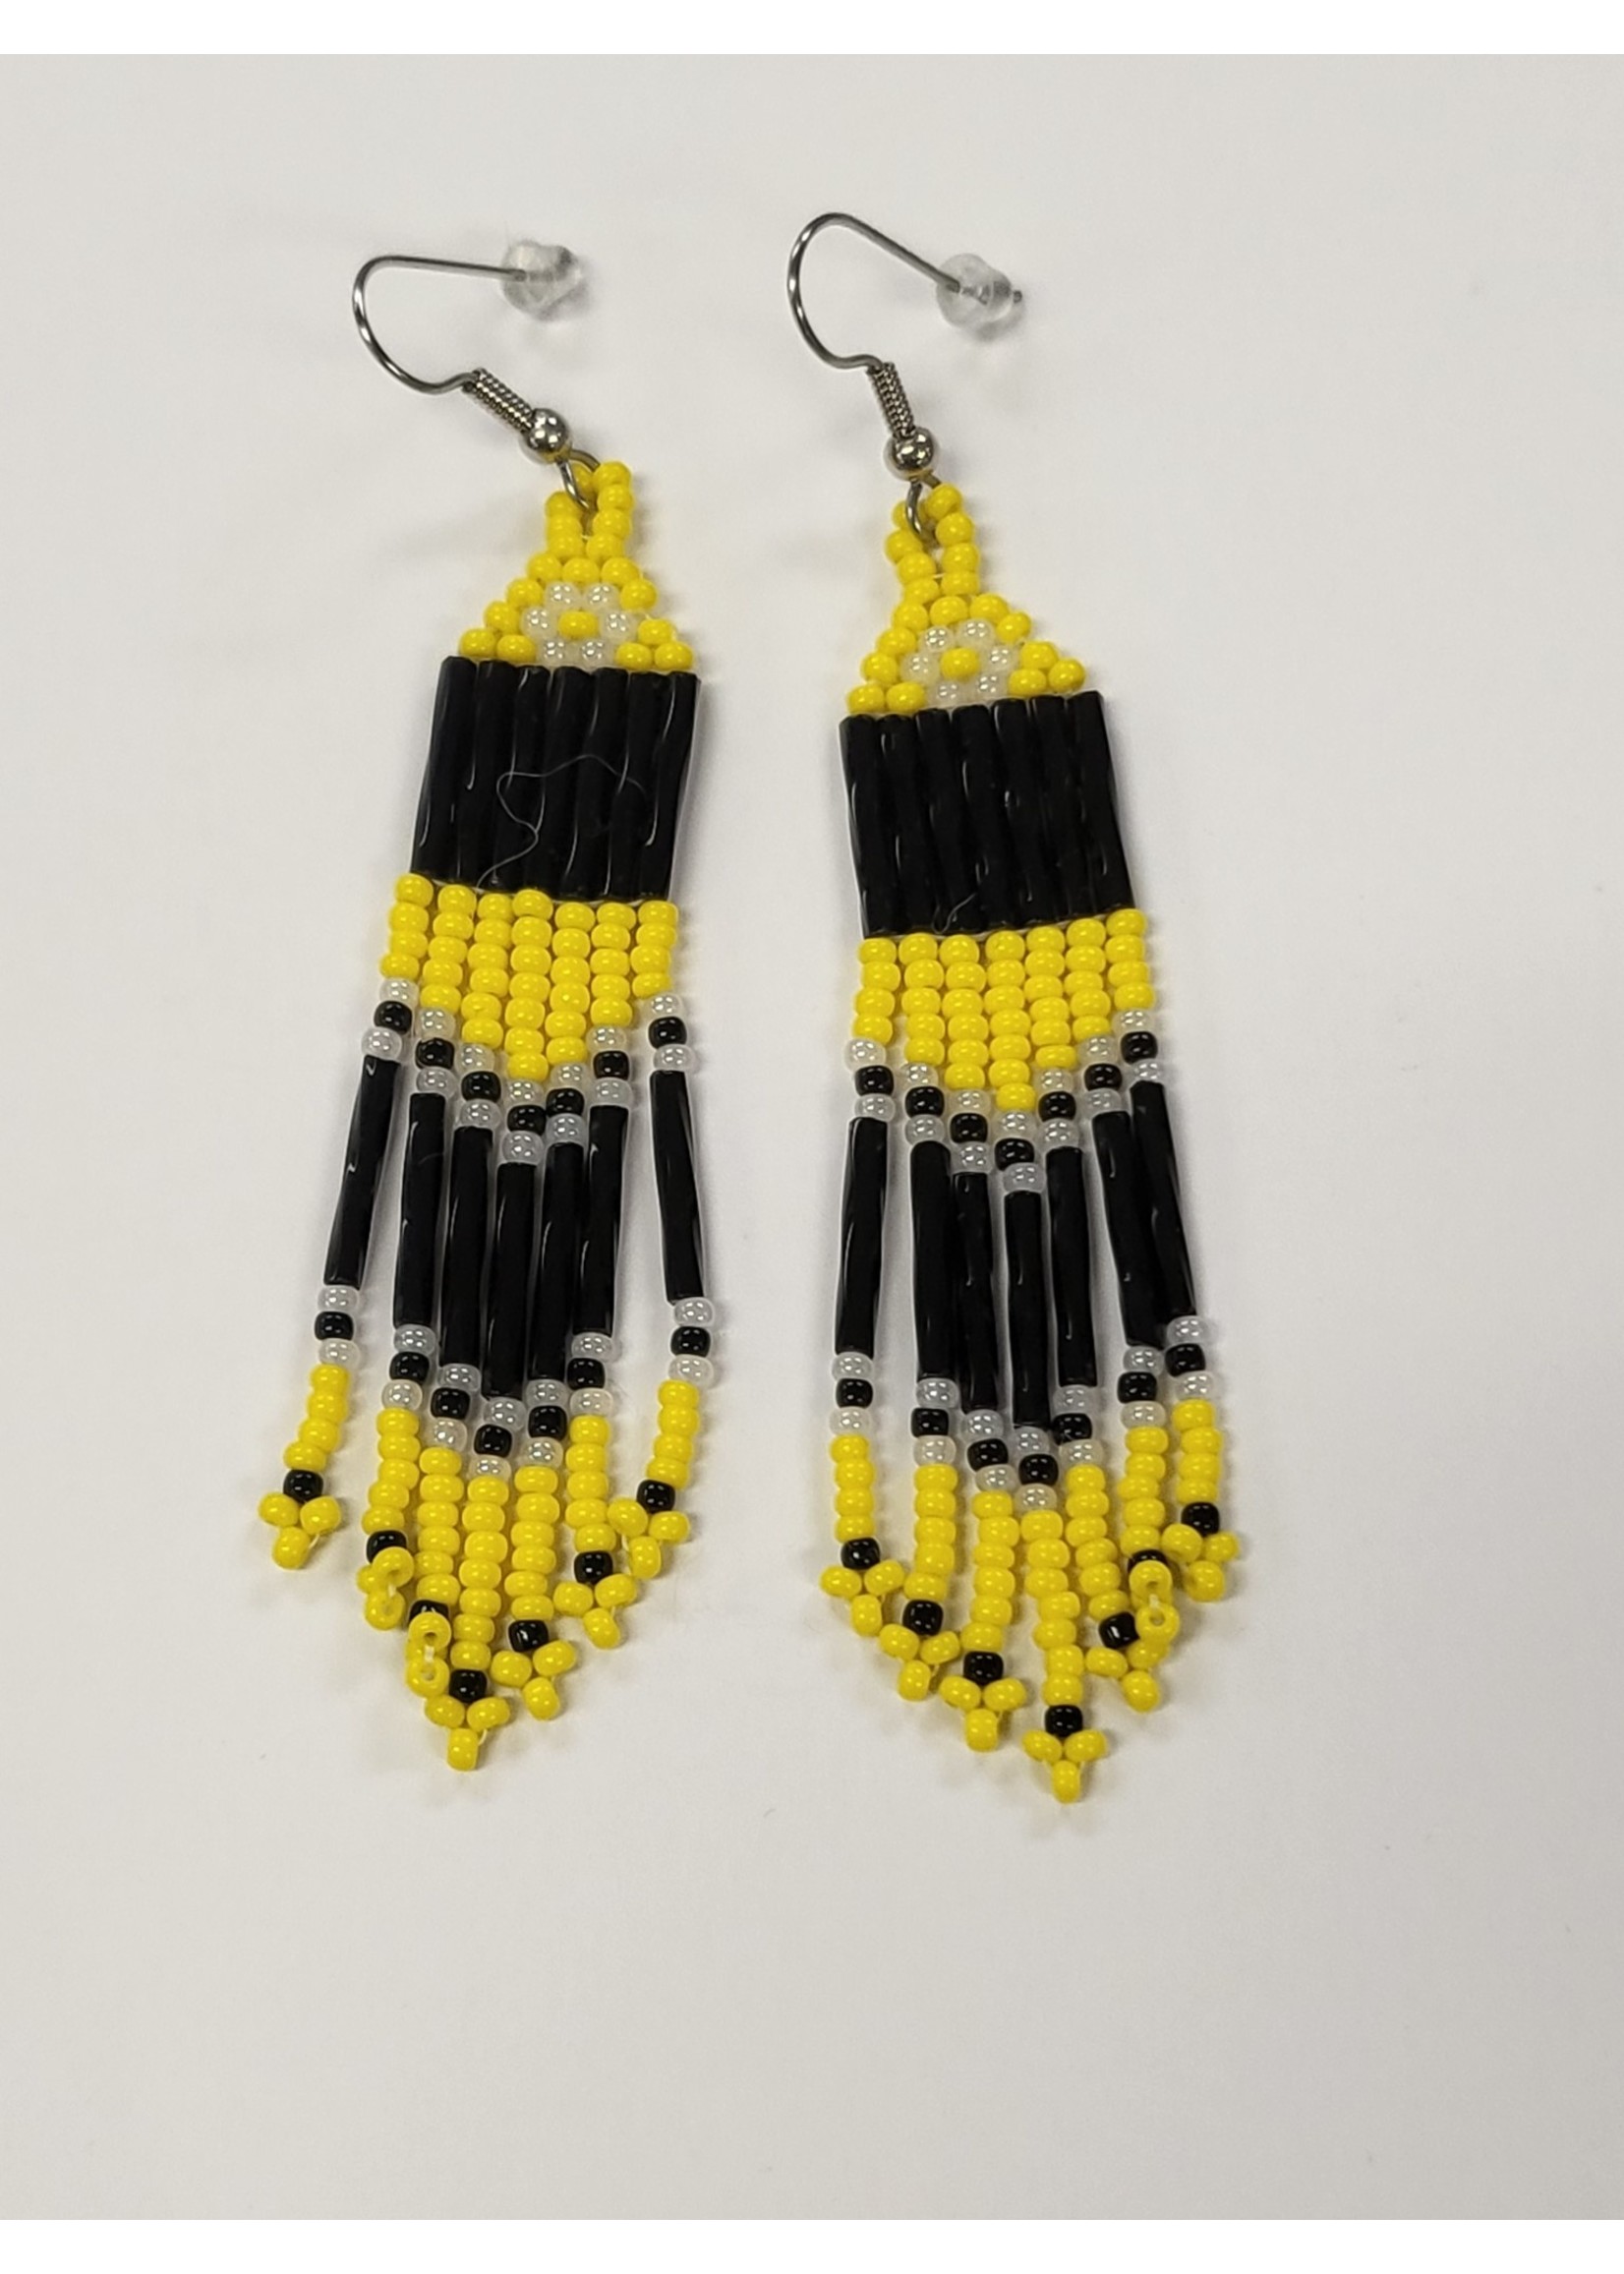 Beaded Earrings Black and Yellow Tassel